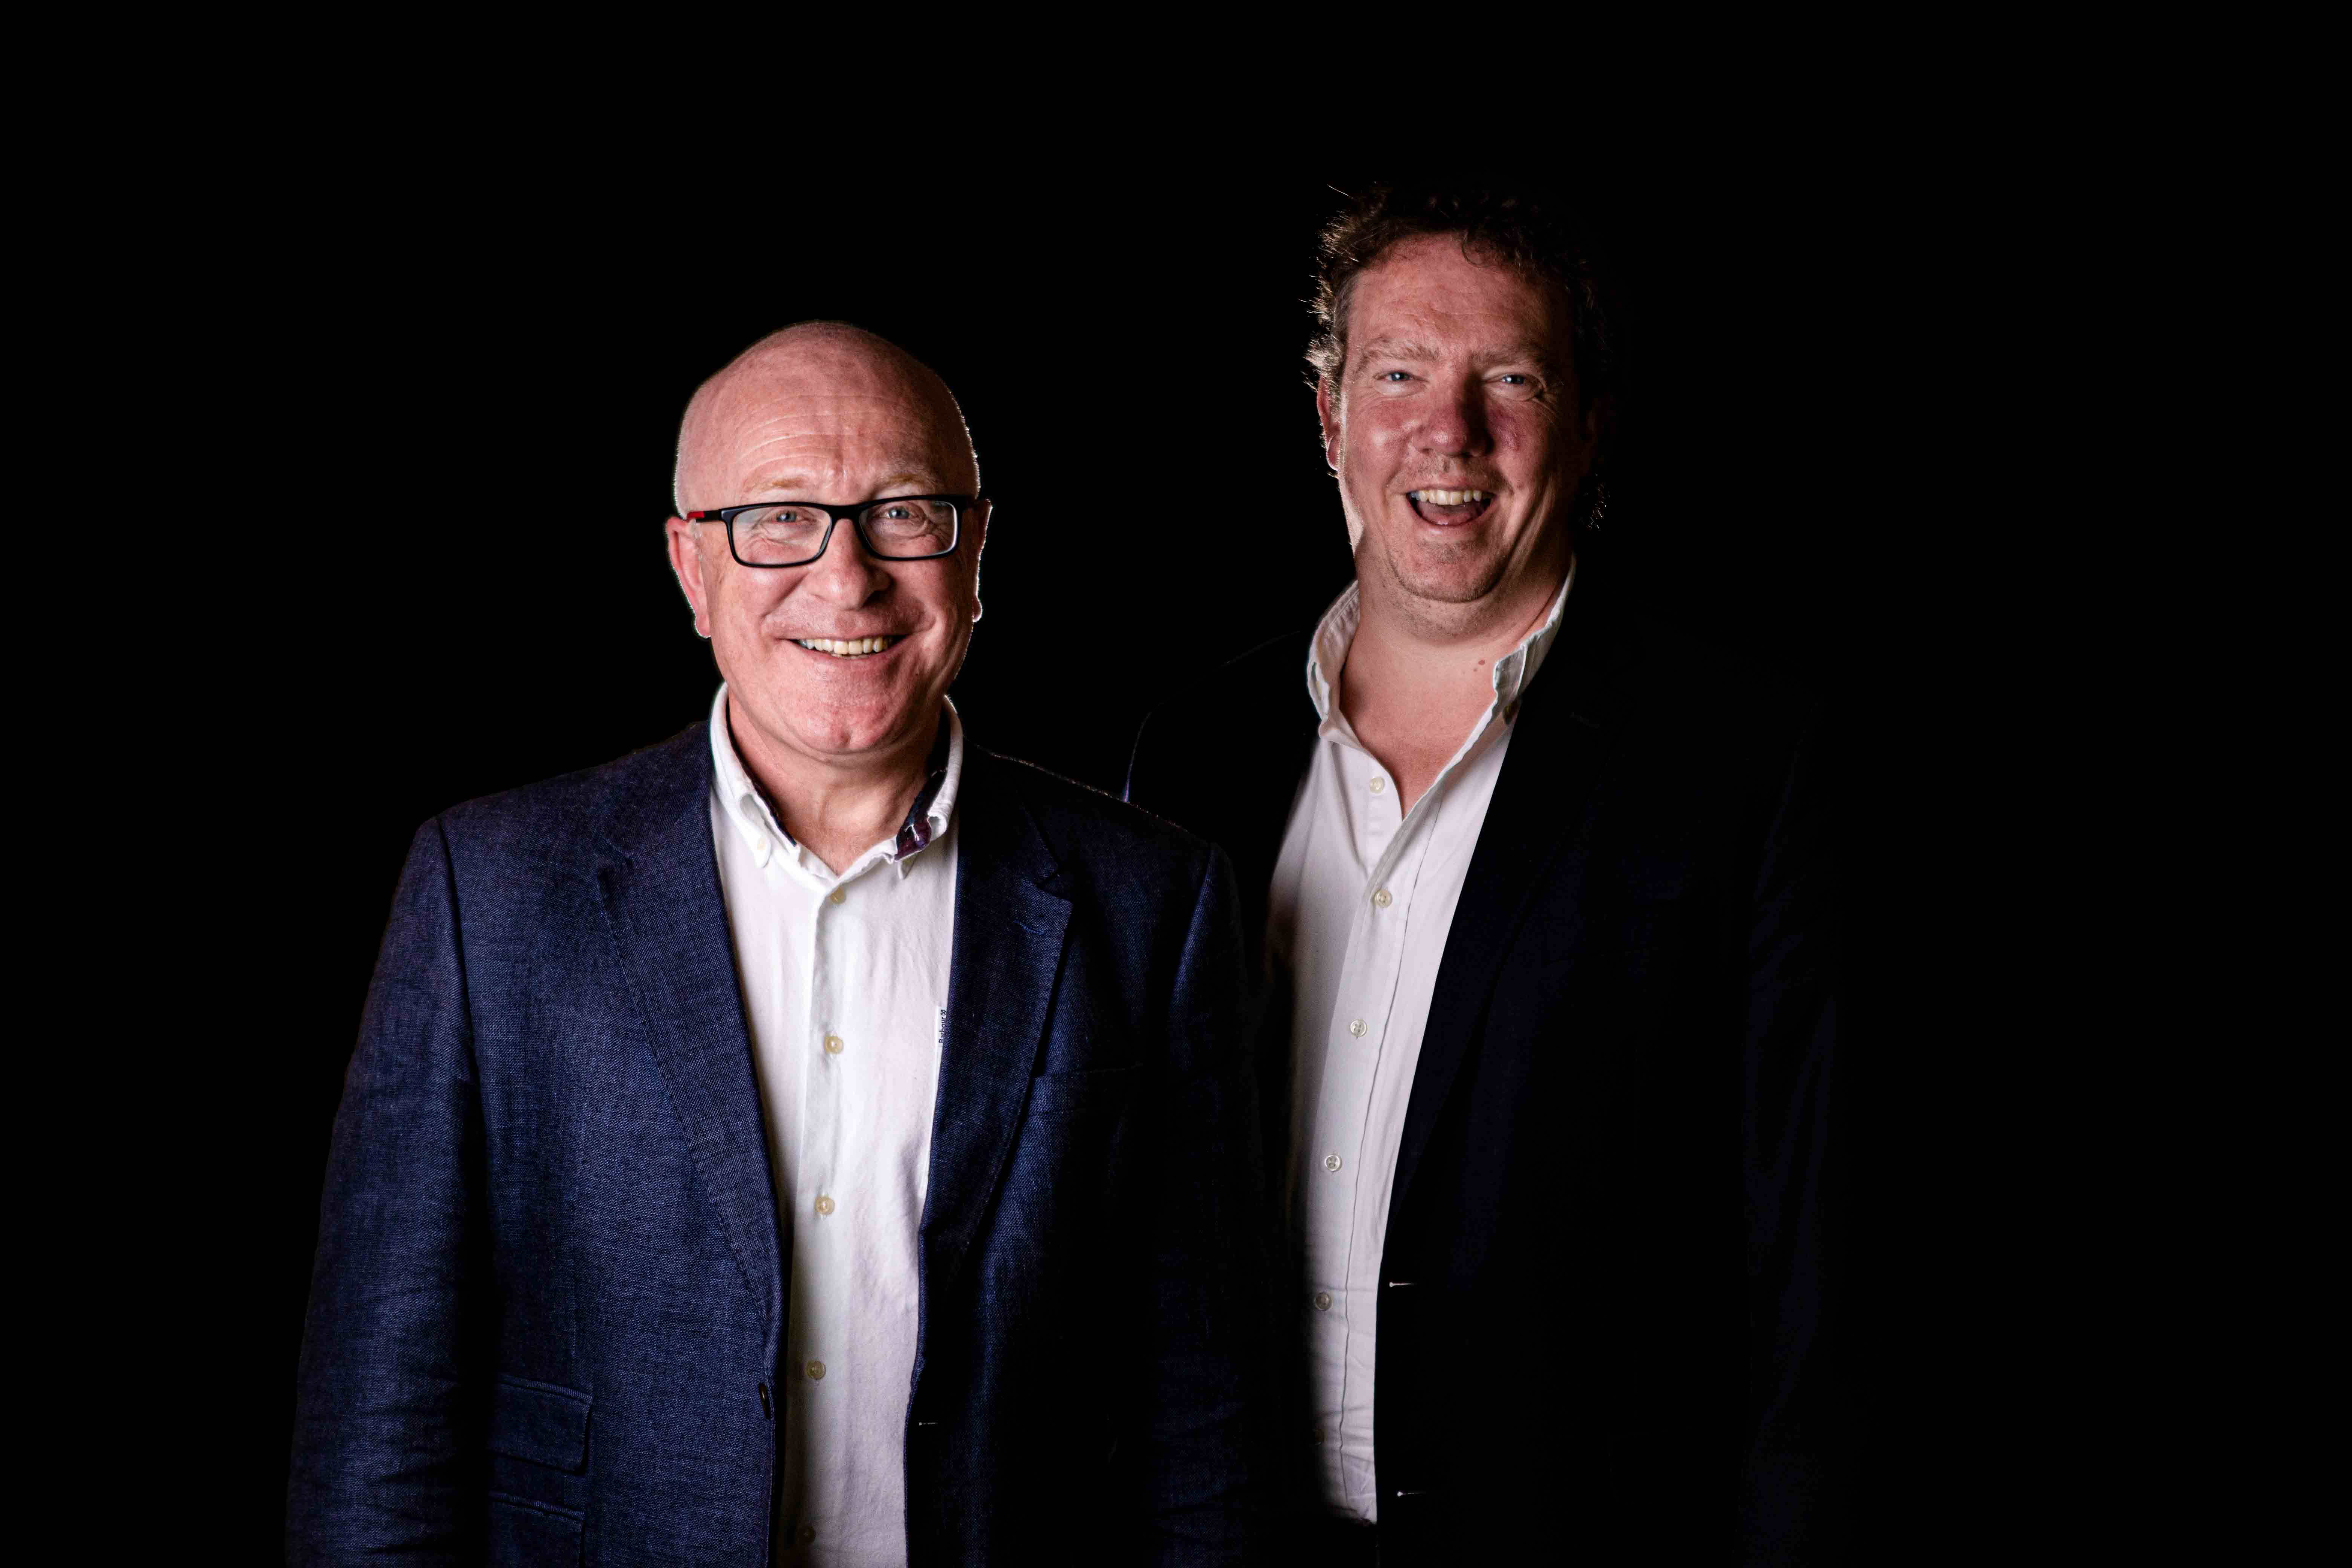 Glen Luss Distillery appoints former KPMG partner Gary Deans as non-executive director